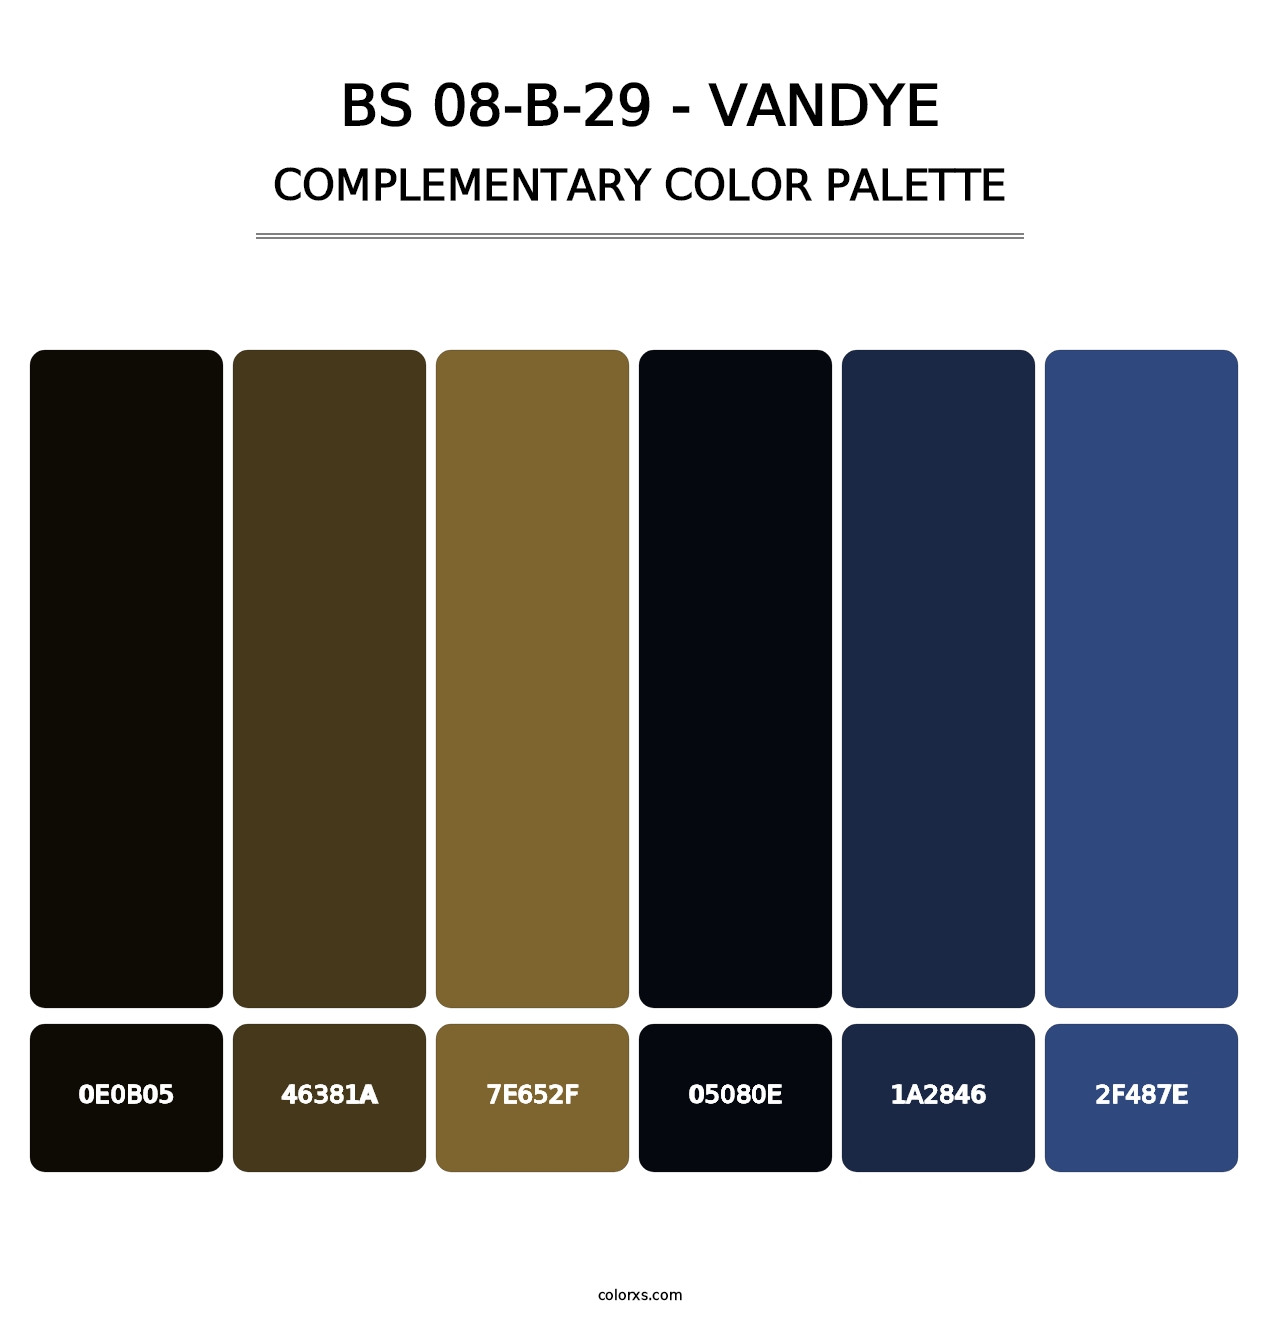 BS 08-B-29 - Vandye - Complementary Color Palette